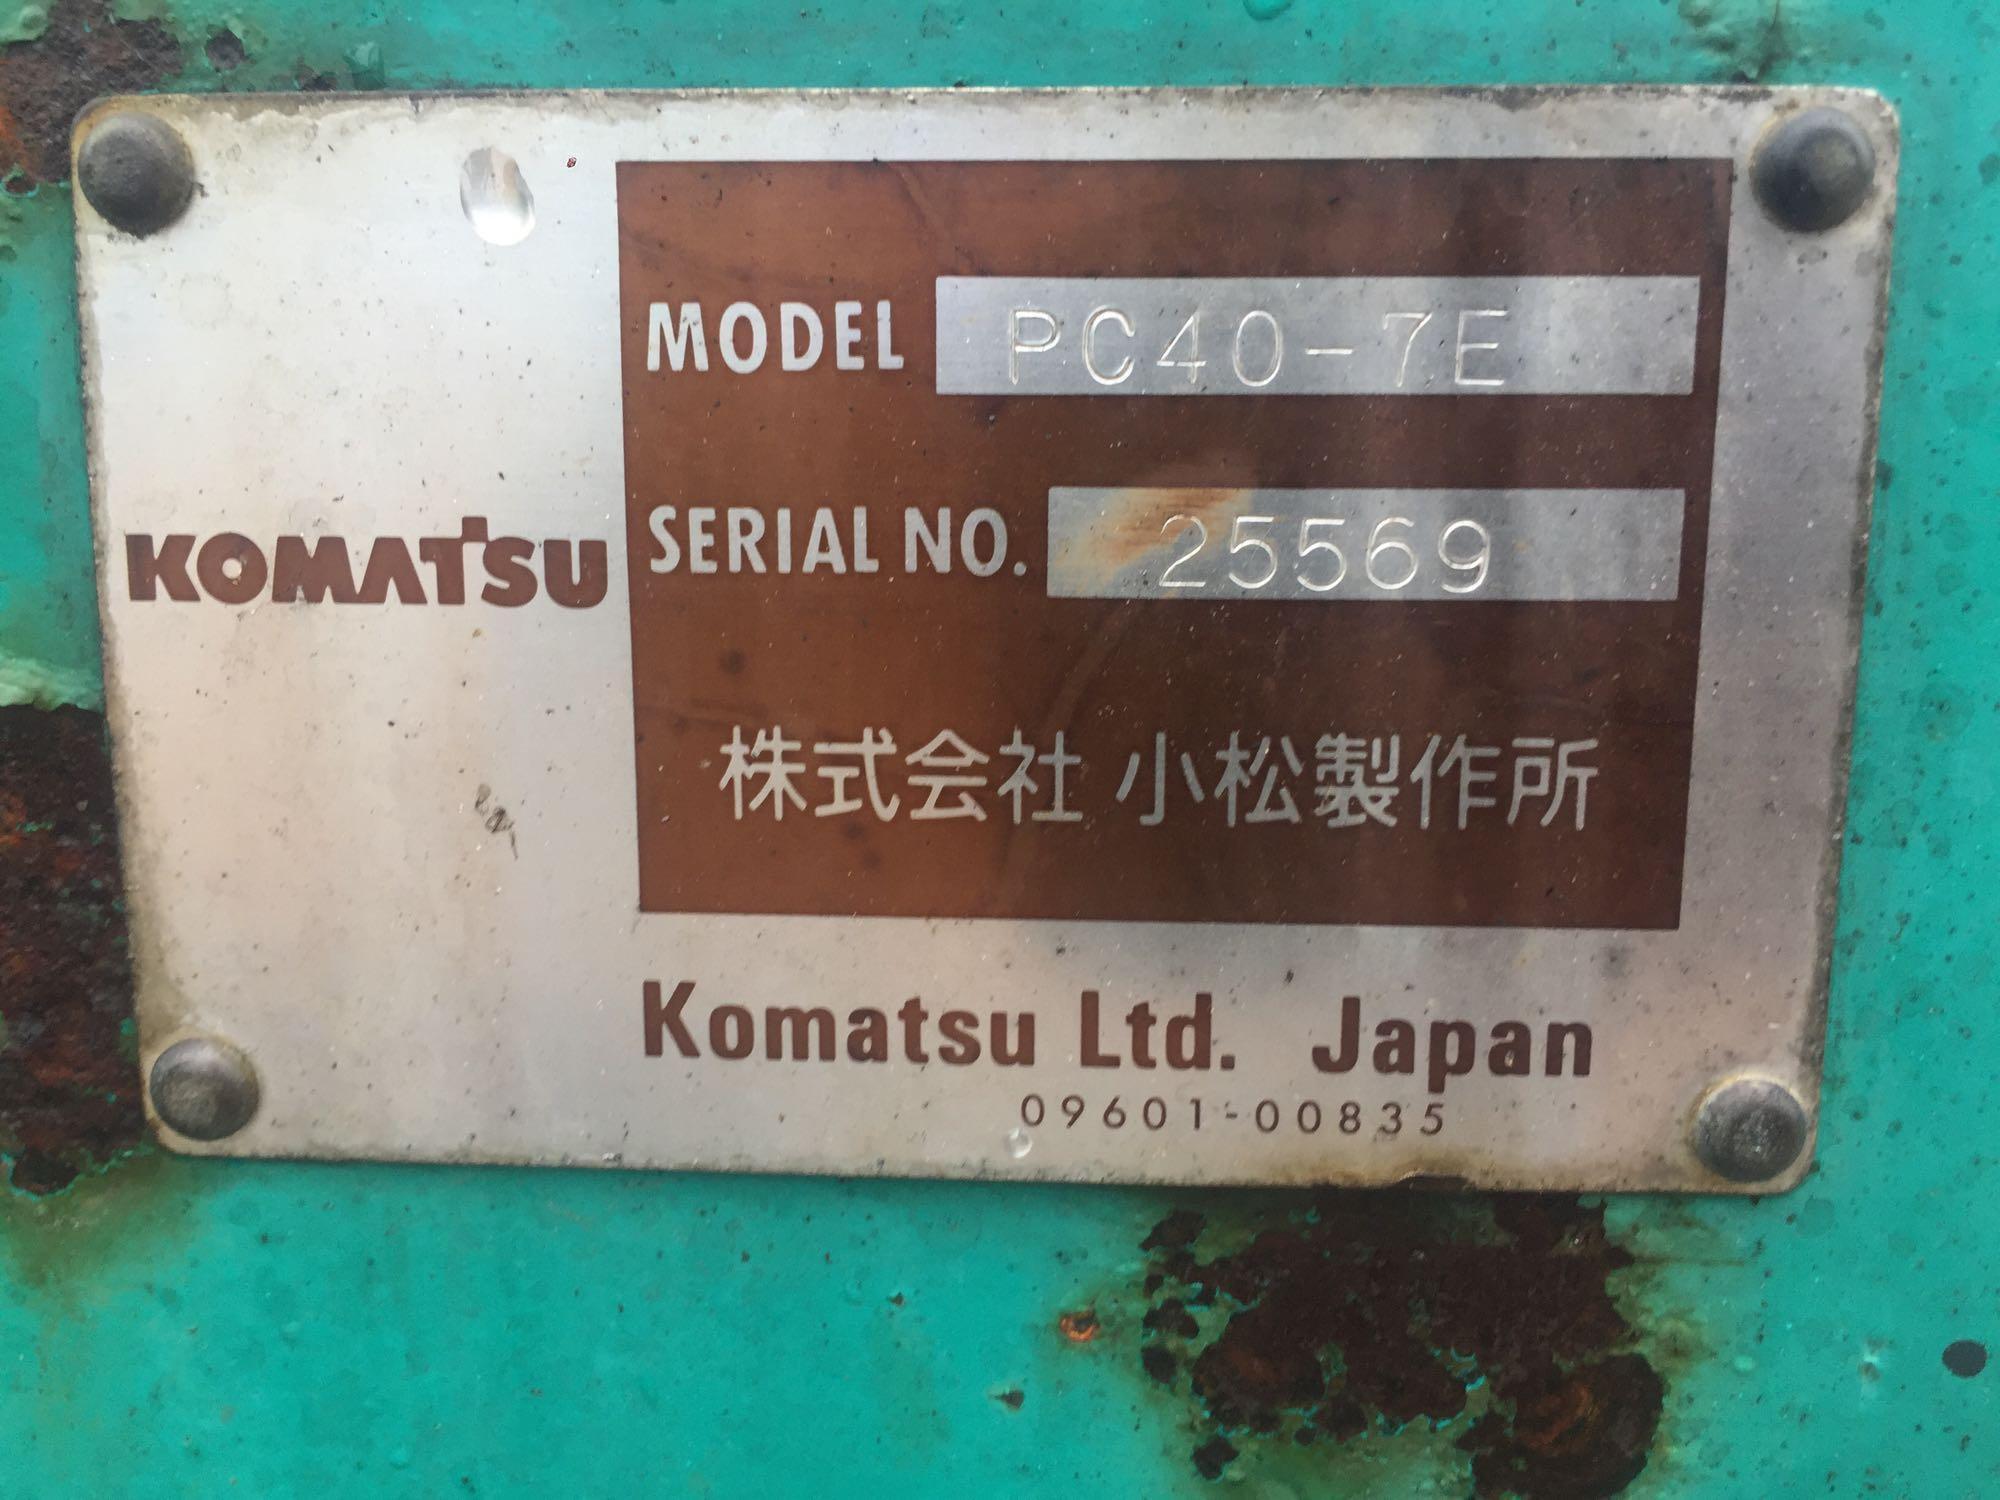 KOMATSU PC40 EXCAVATOR. S/N 25569. ENCLOSED CAB, A/C. AUX HYDRAULICS. PUSH BLADE, SMOOTH EDGE